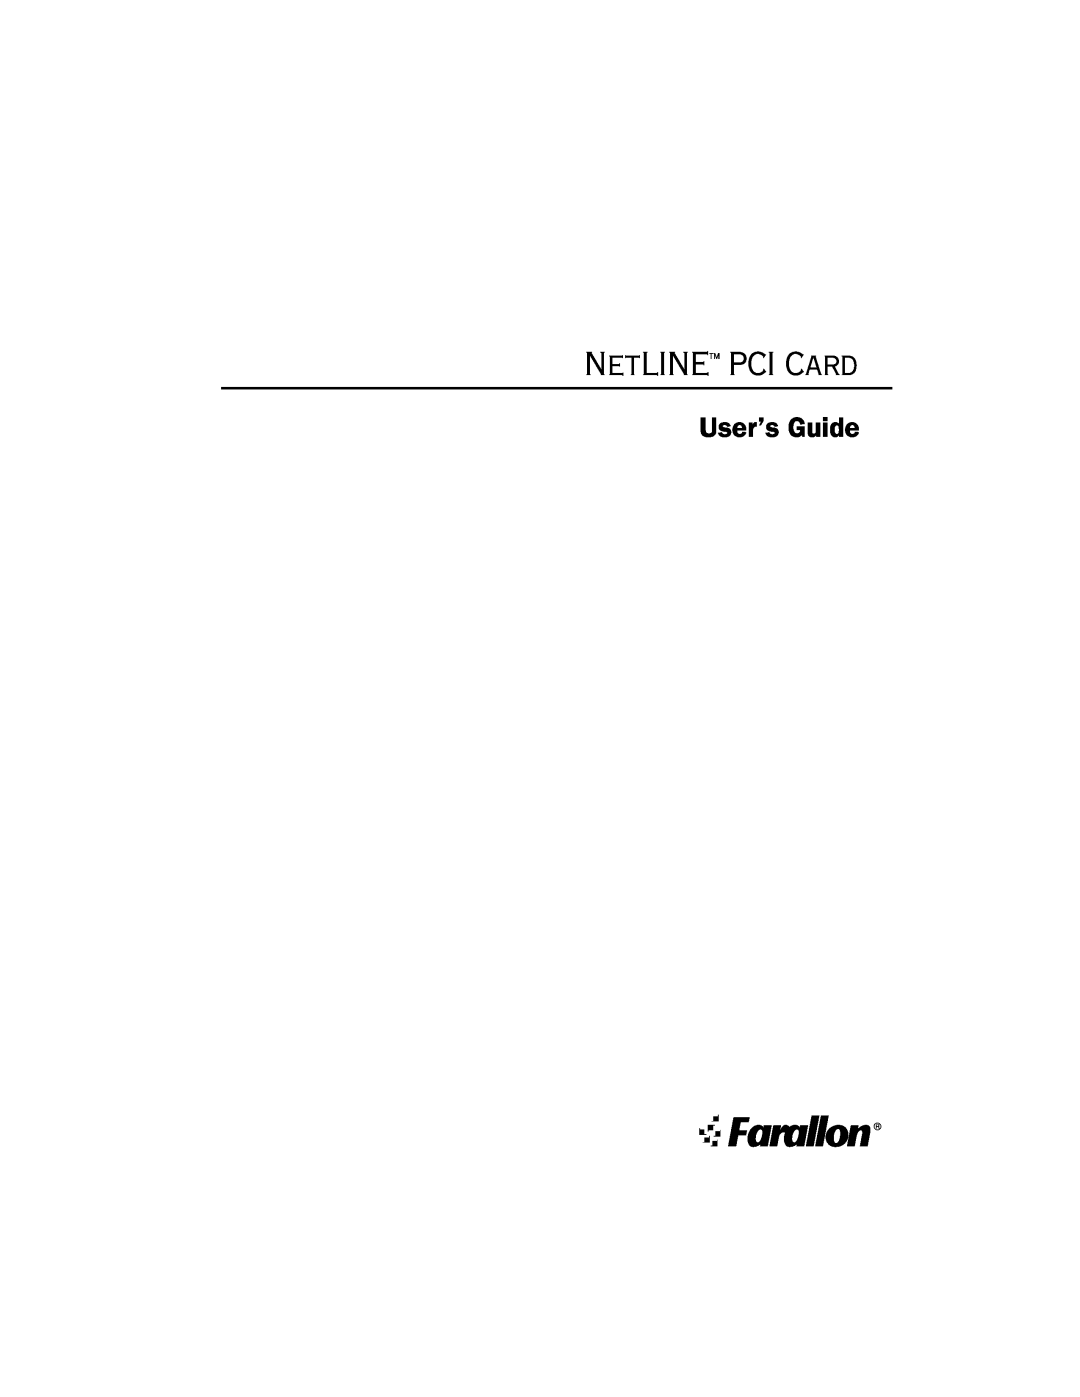 Farallon Communications PCI Card manual User’s Guide, Farallon, Netline Pci Card 